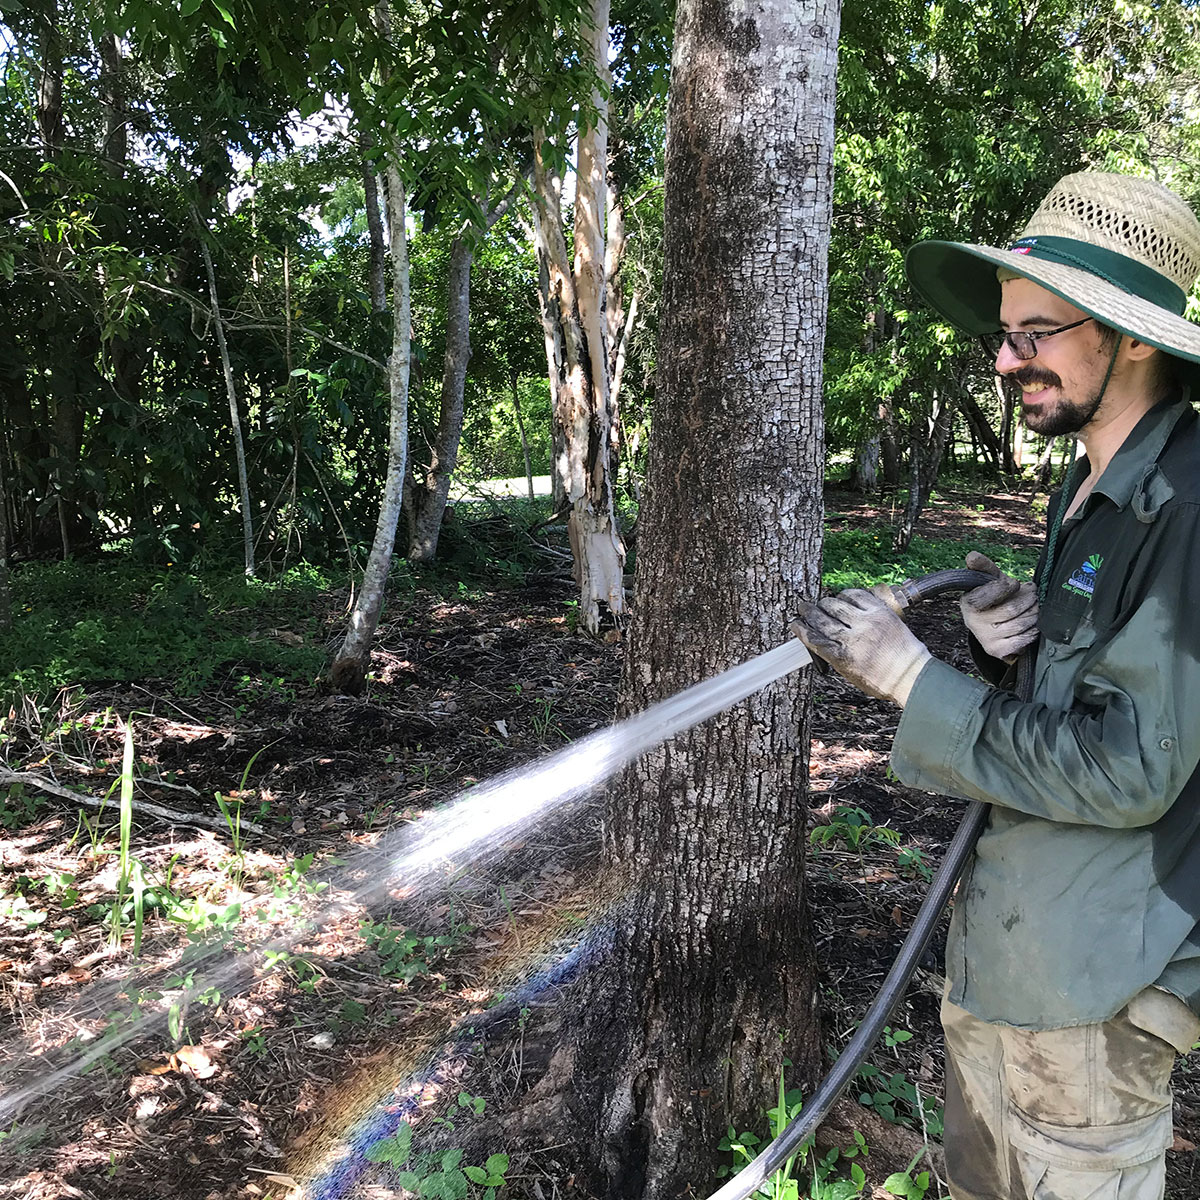 Male volunteering using hose to water new plantings